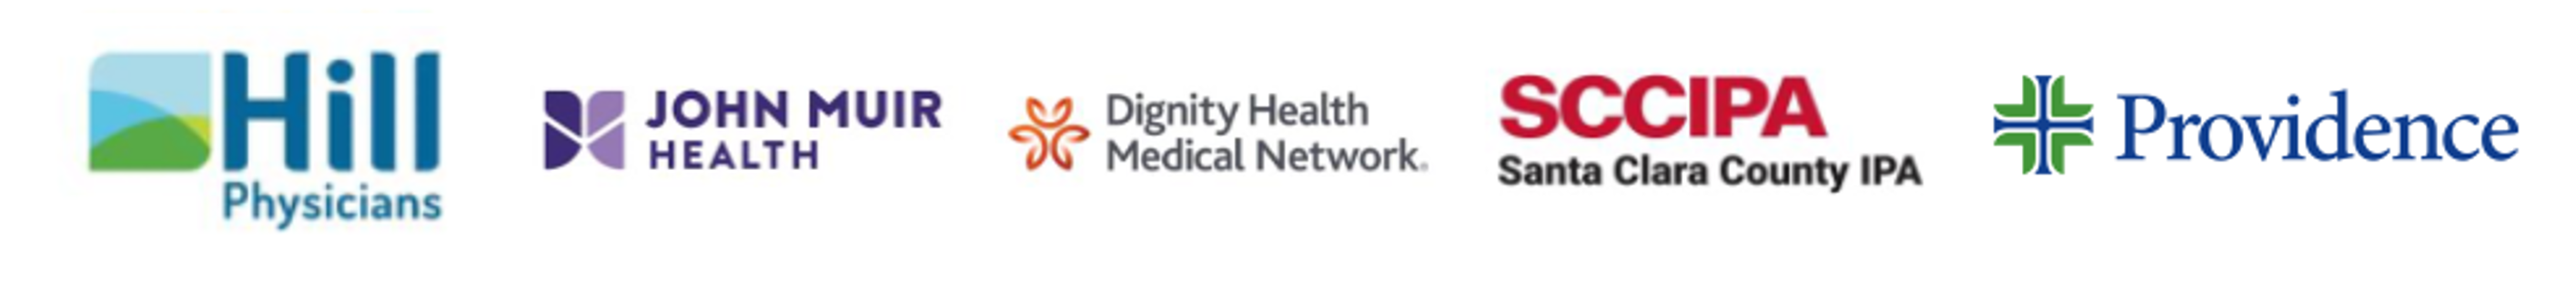 Medical groups associated with Canopy Health: Hill Physicians, John Muir Health, Dignity Health Medical Network, Santa Clara County IPA, Providence